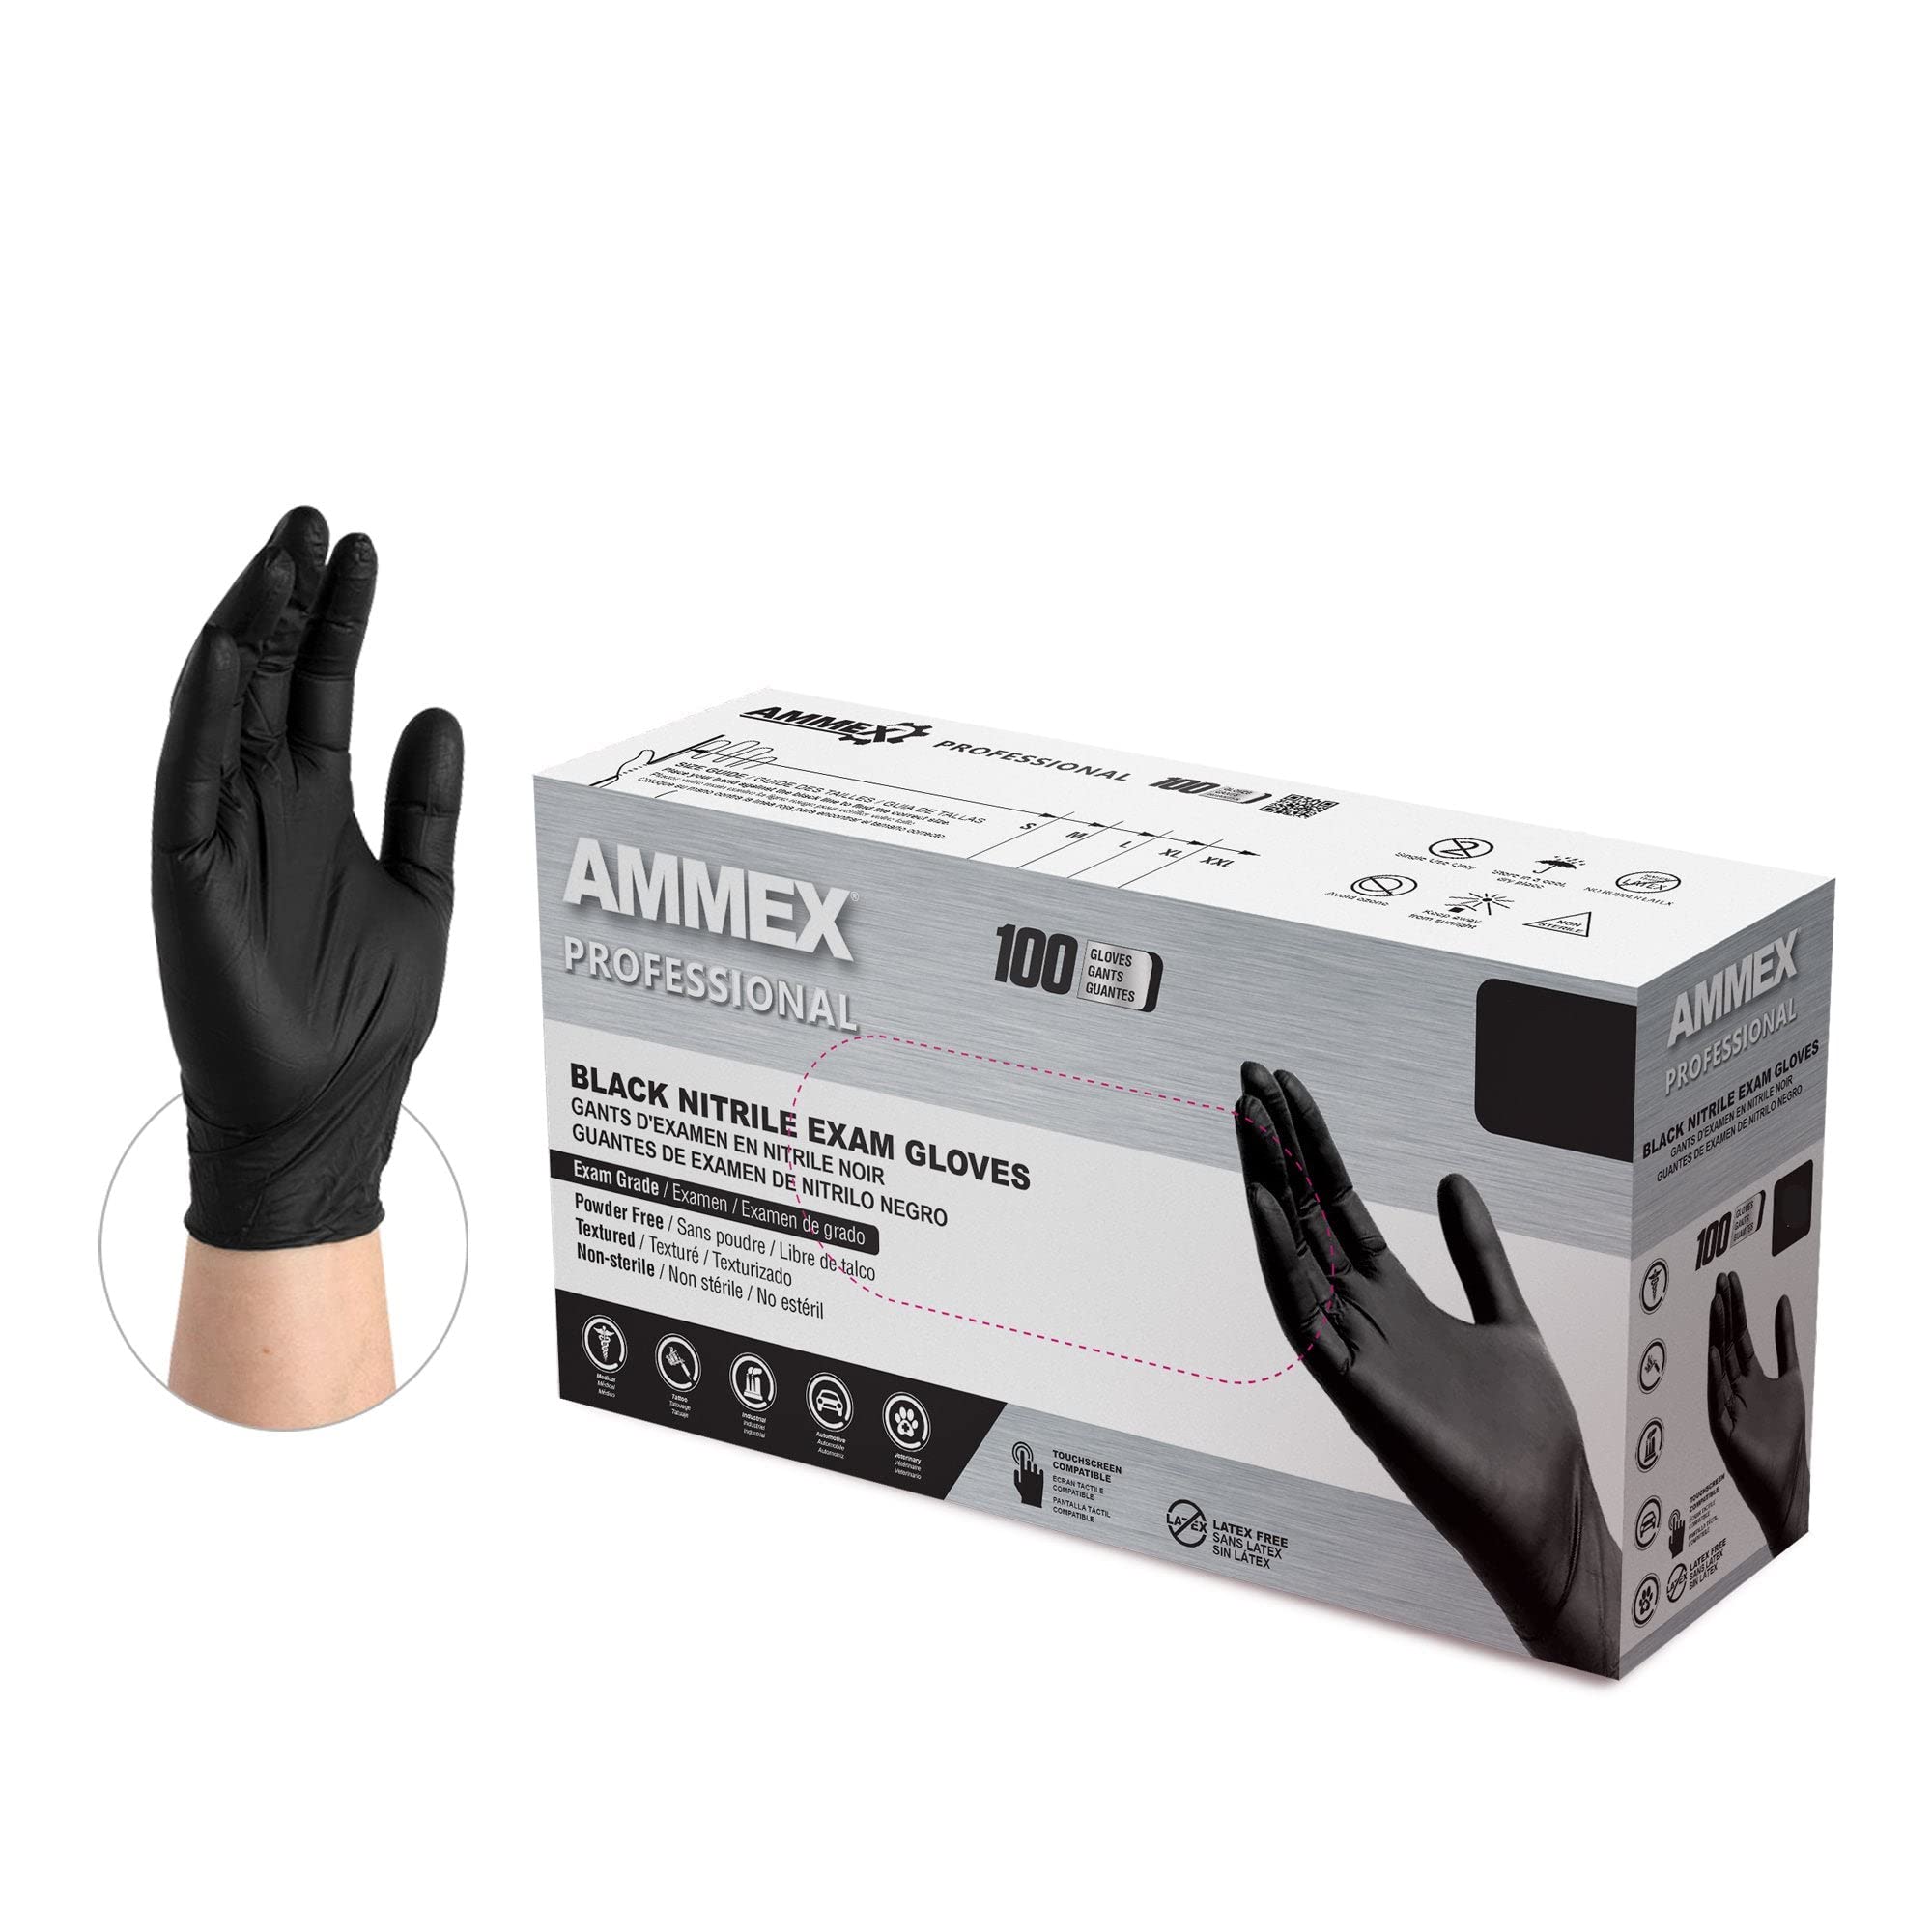 Ammex قفازات سوداء طبية / نيتريل للاستعمال مرة واحدة خا...